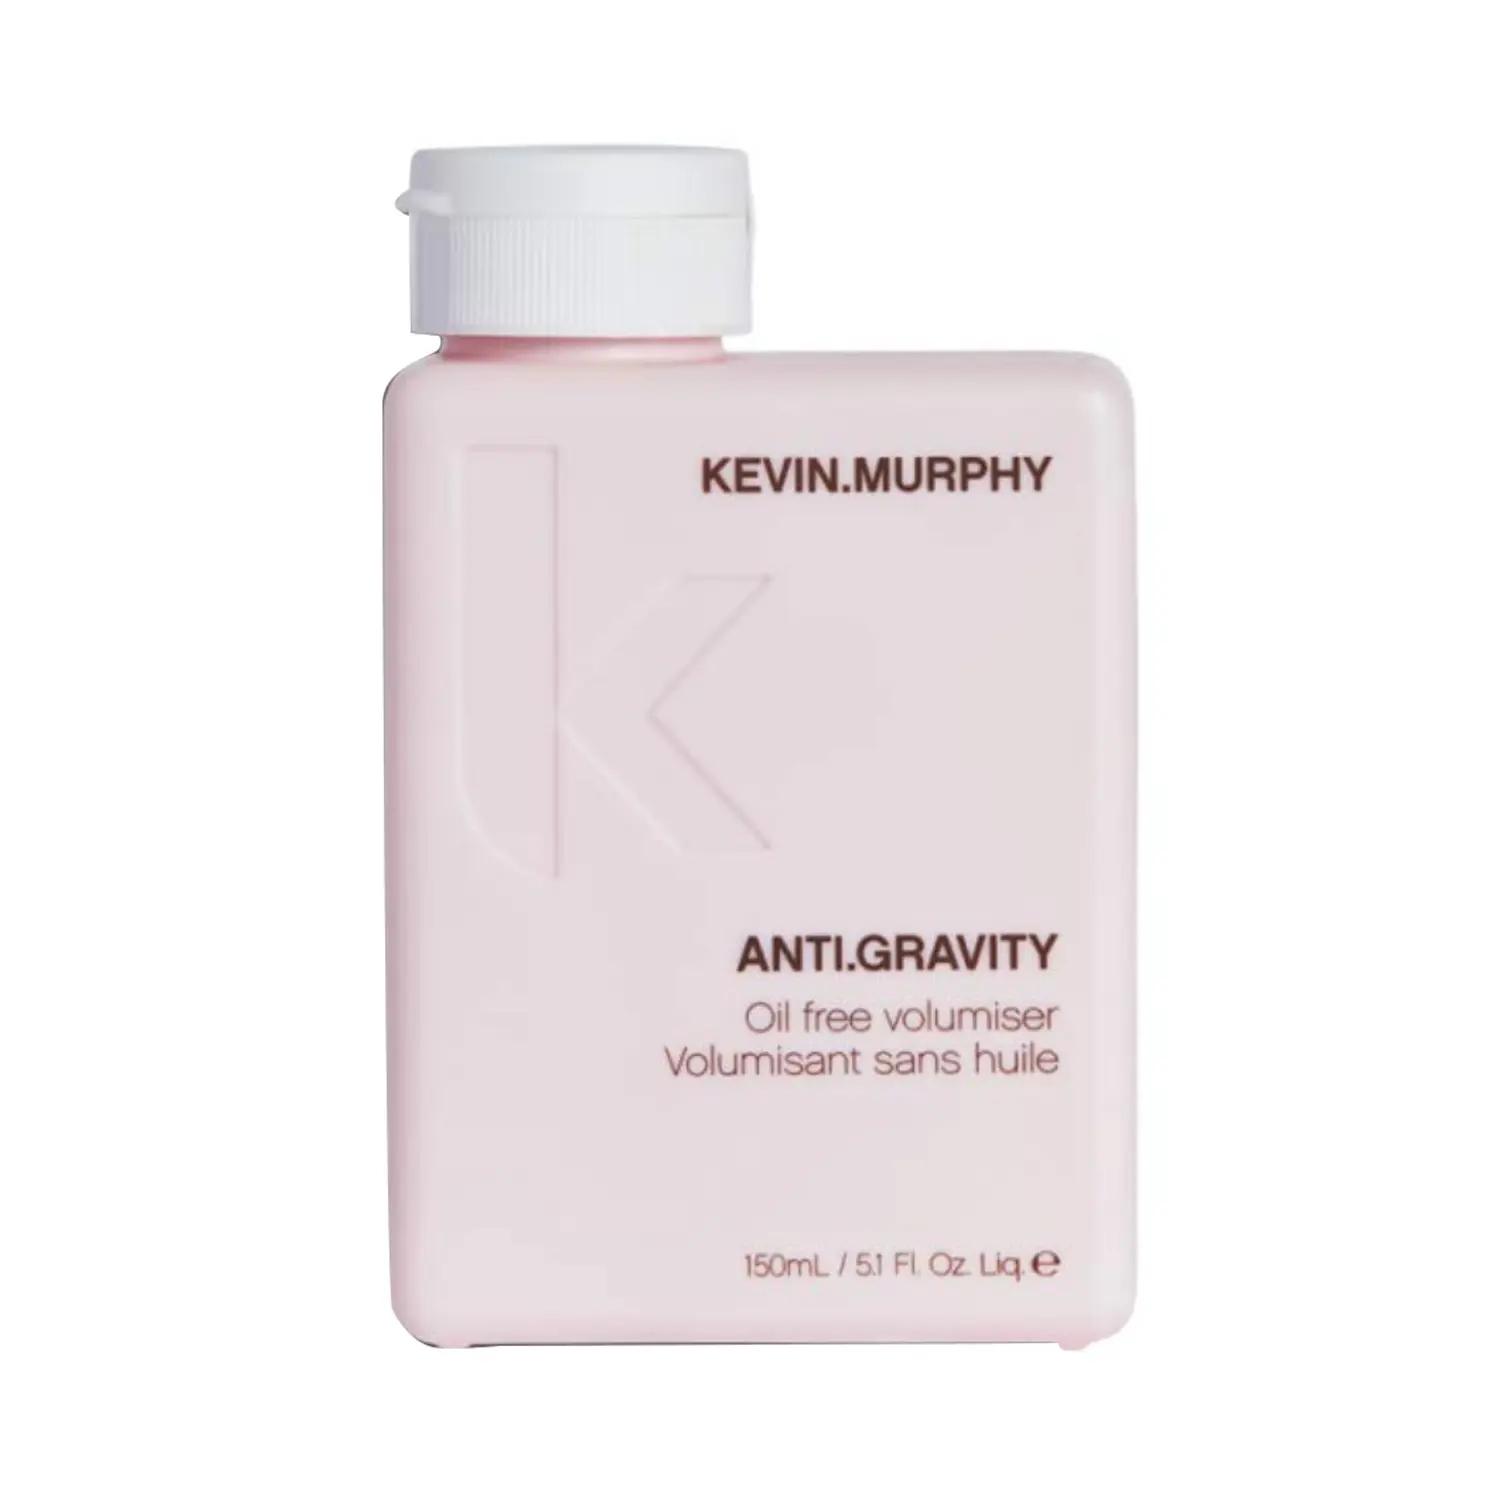 kevin murphy anti gravity oil free volumiser (150ml)